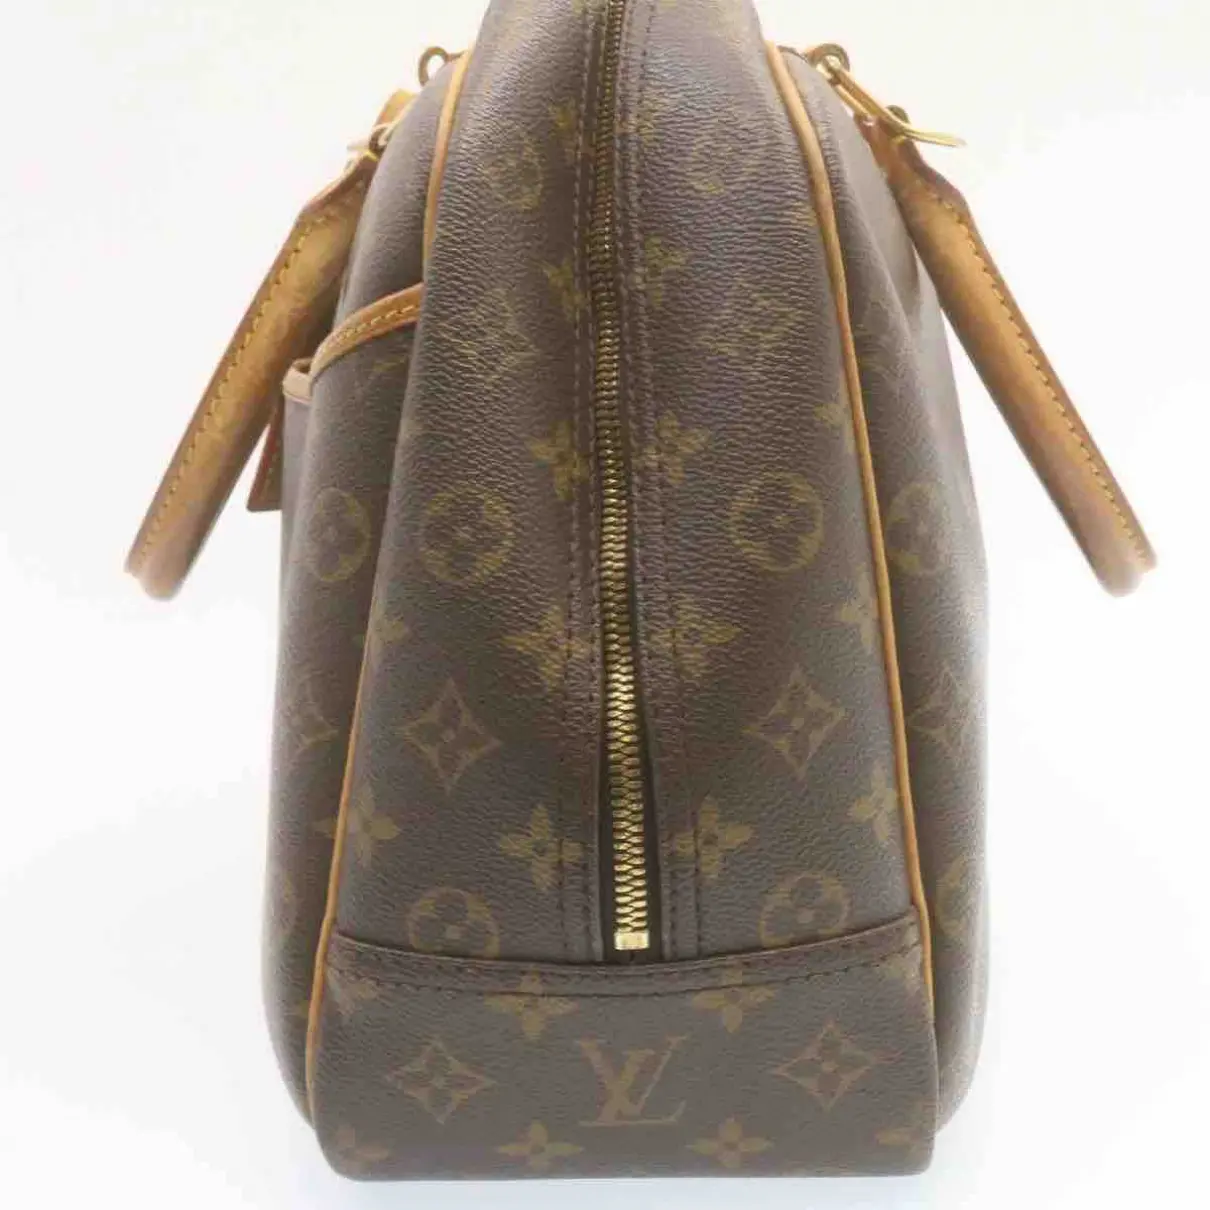 Deauville leather handbag Louis Vuitton